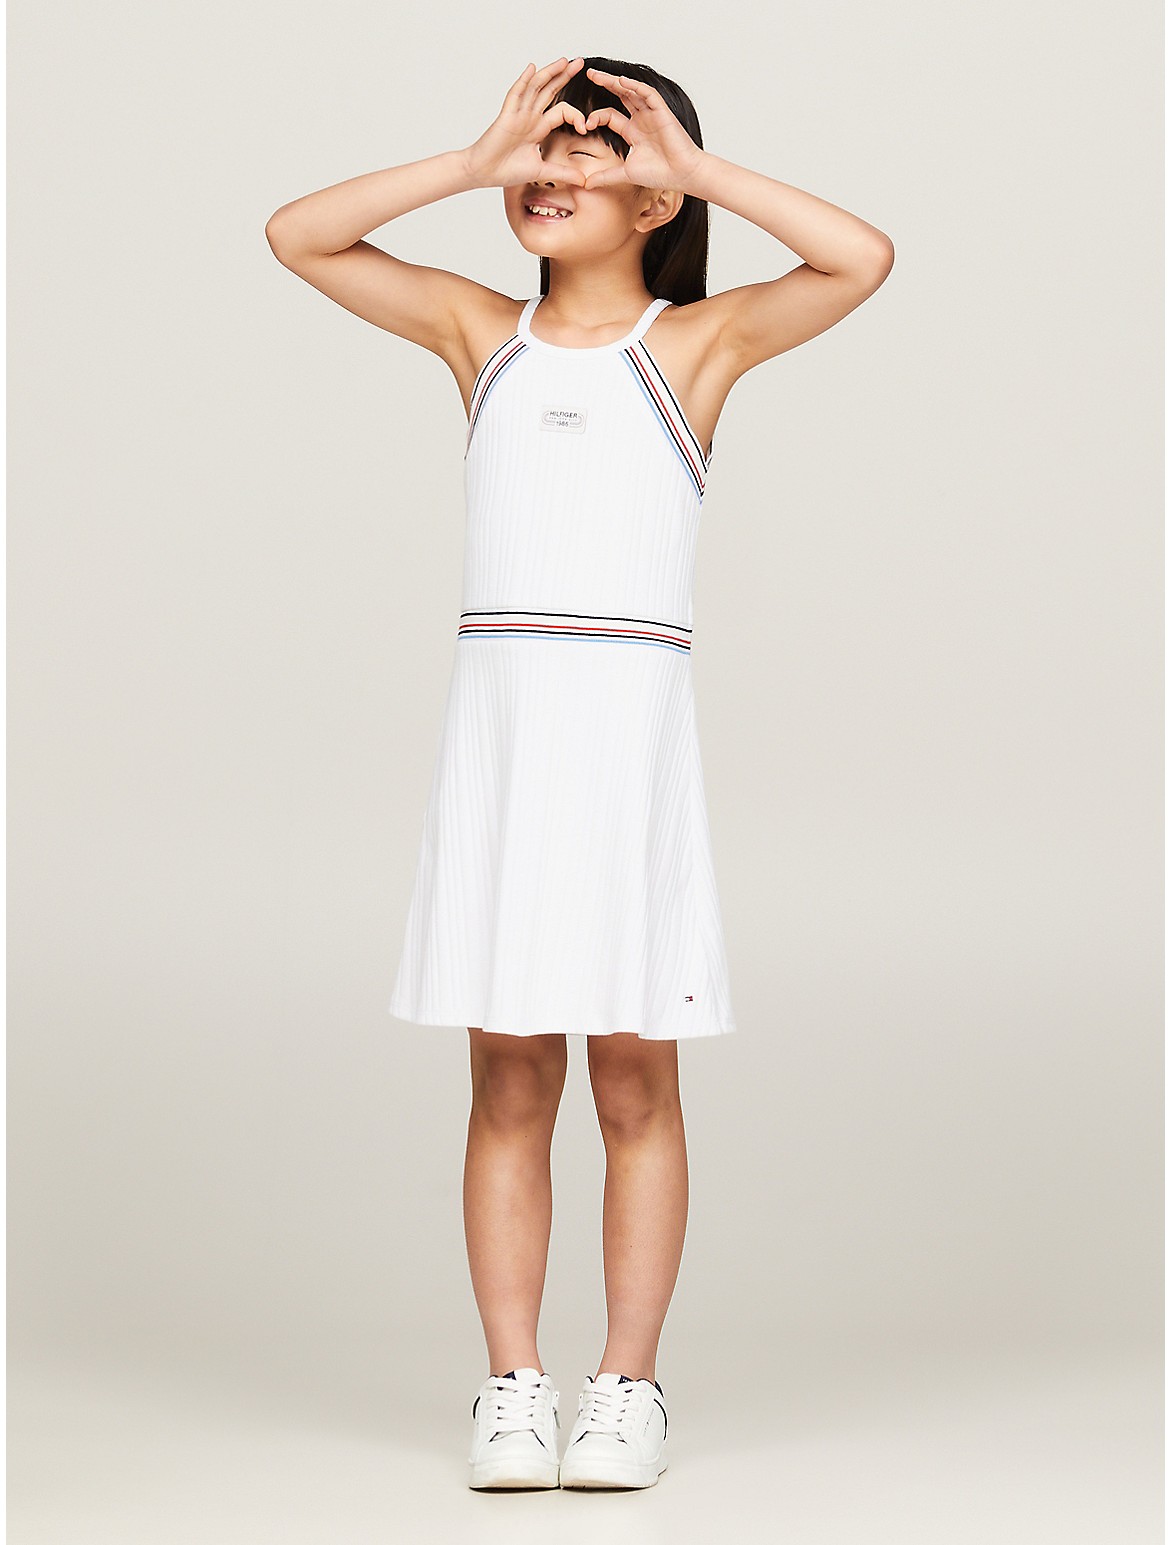 Tommy Hilfiger Girls' Kids' Hilfiger 85 Halter Sport Dress